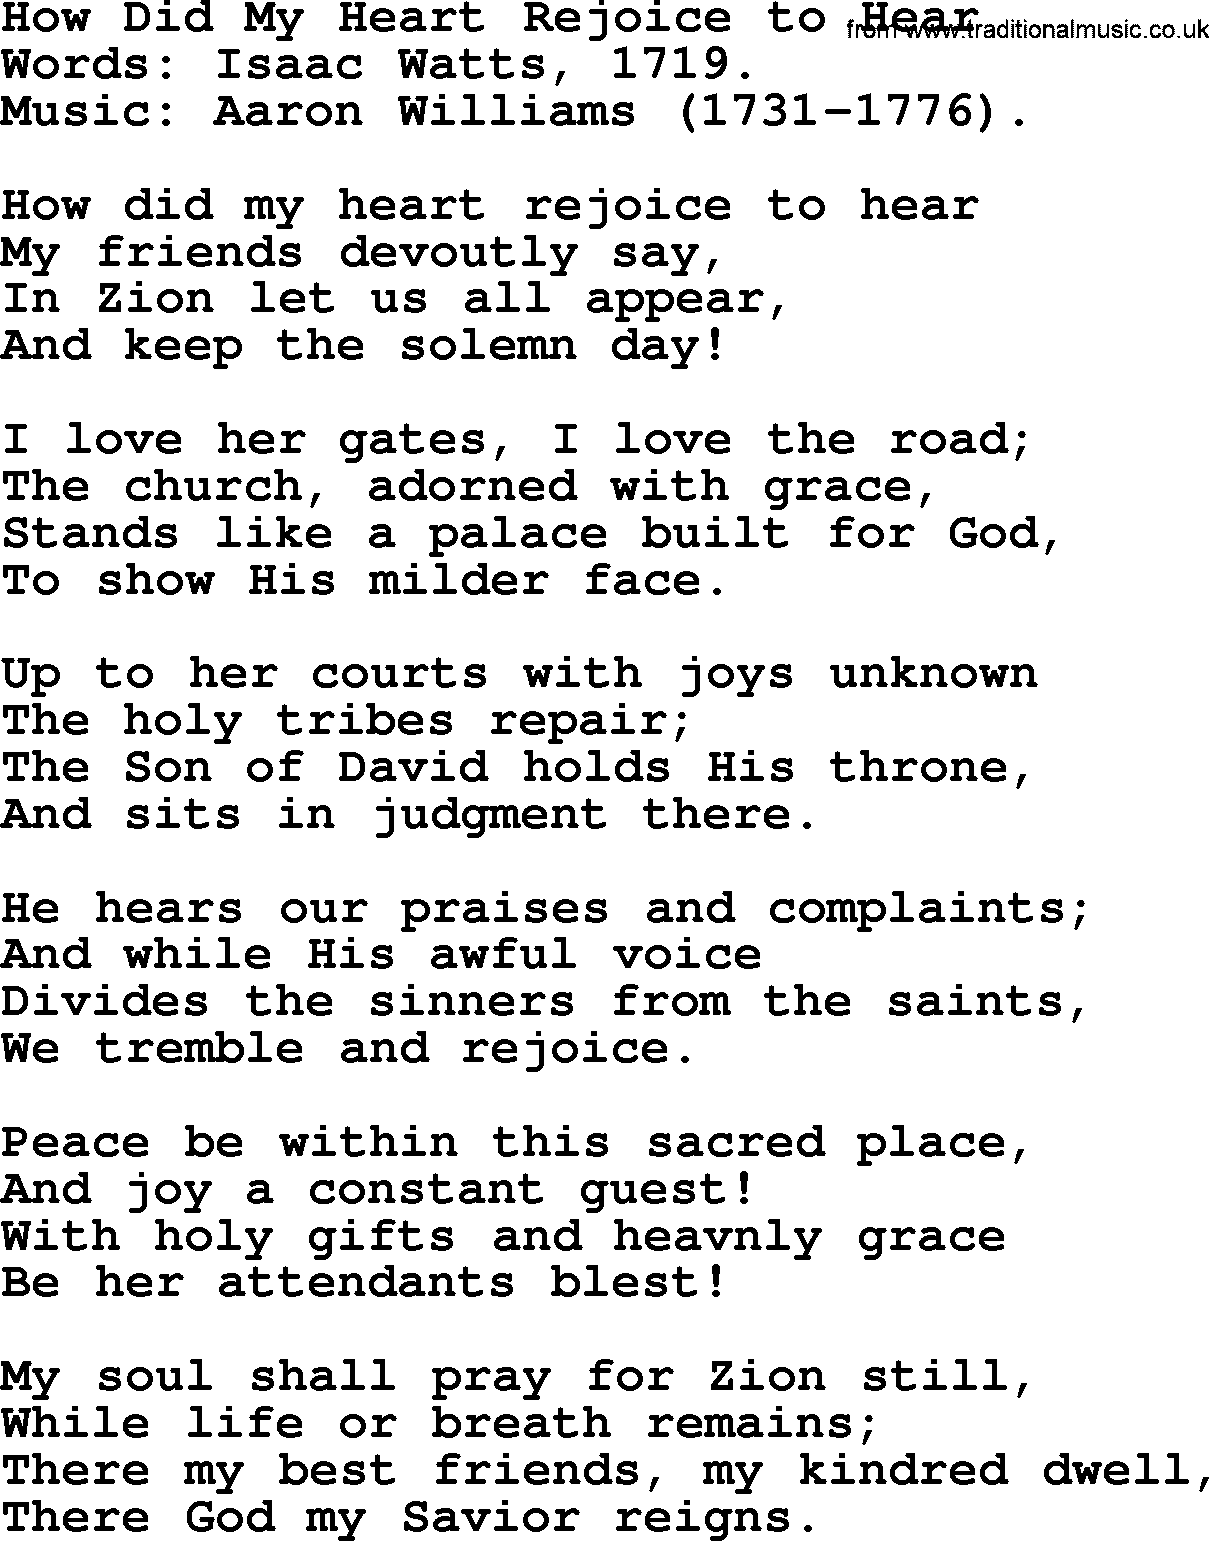 Isaac Watts Christian hymn: How Did My Heart Rejoice to Hear- lyricss